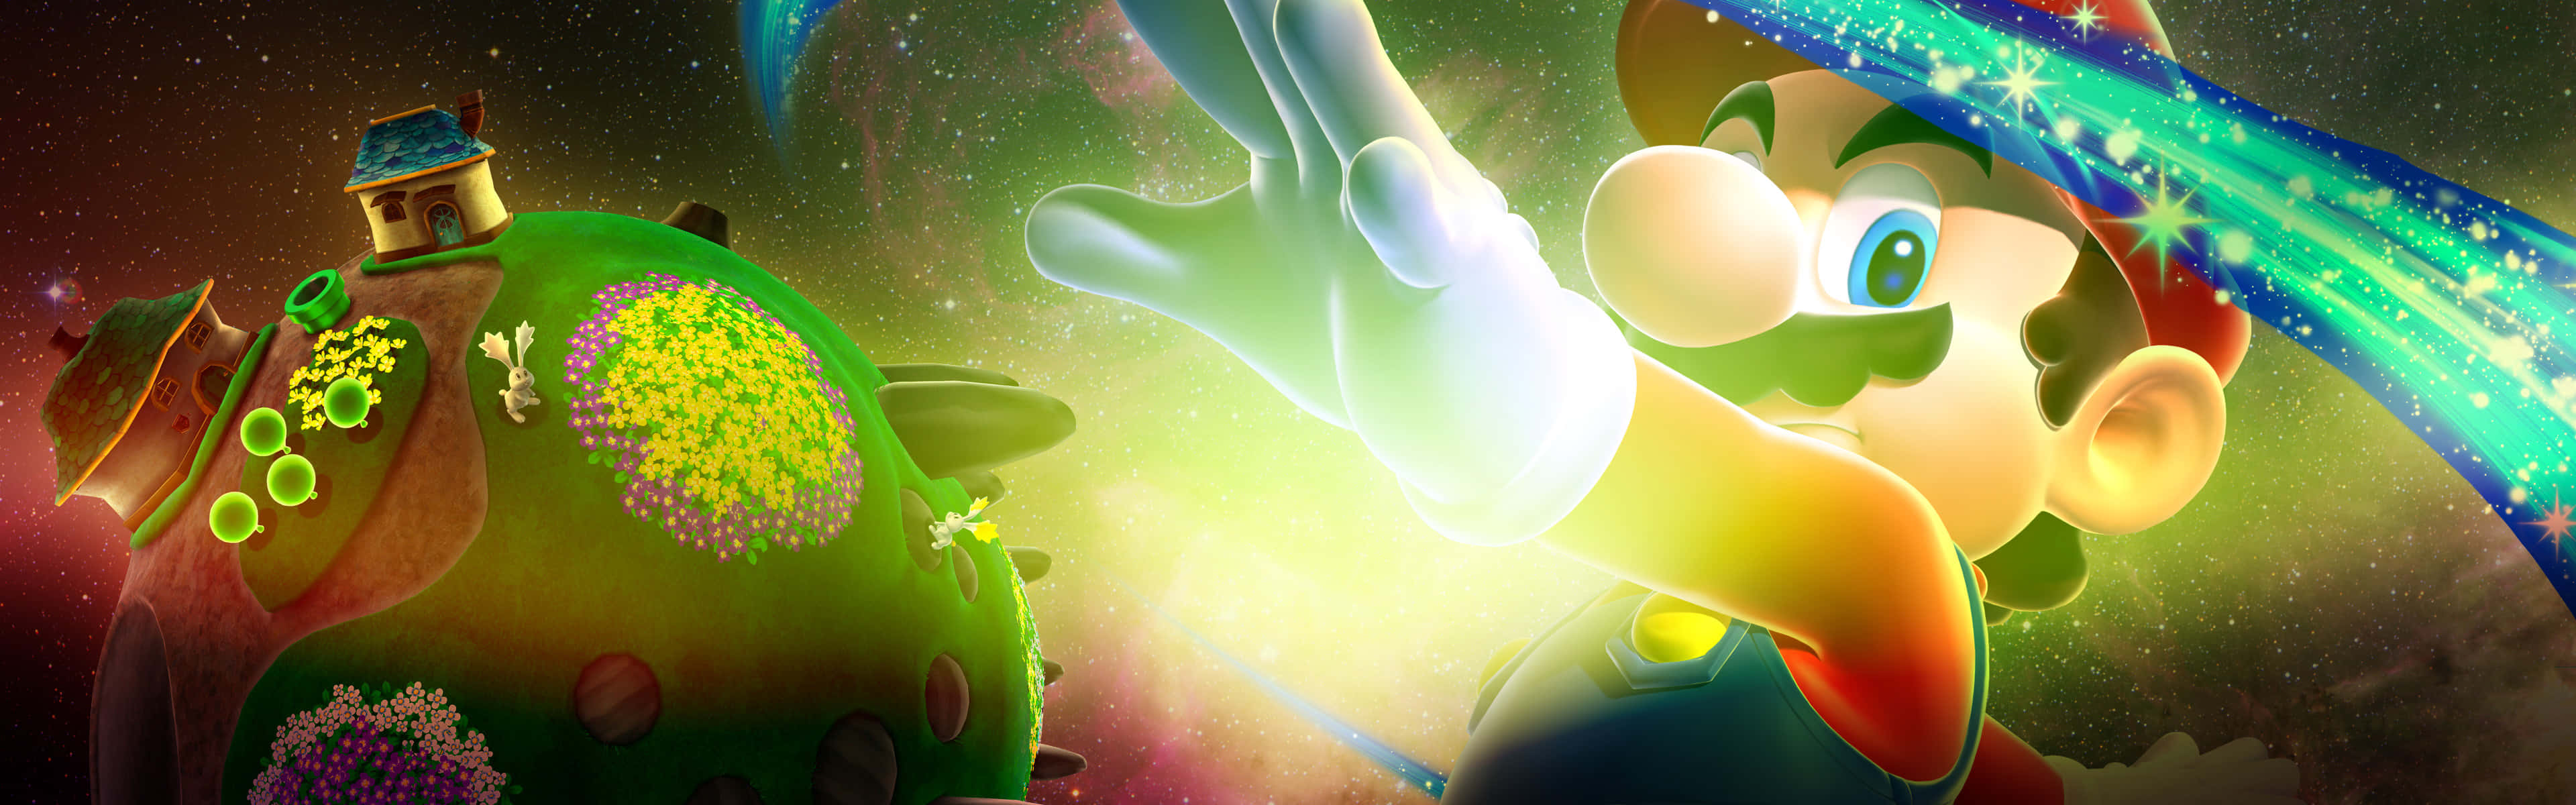 "Explore new galaxies with Super Mario Galaxy!" Wallpaper